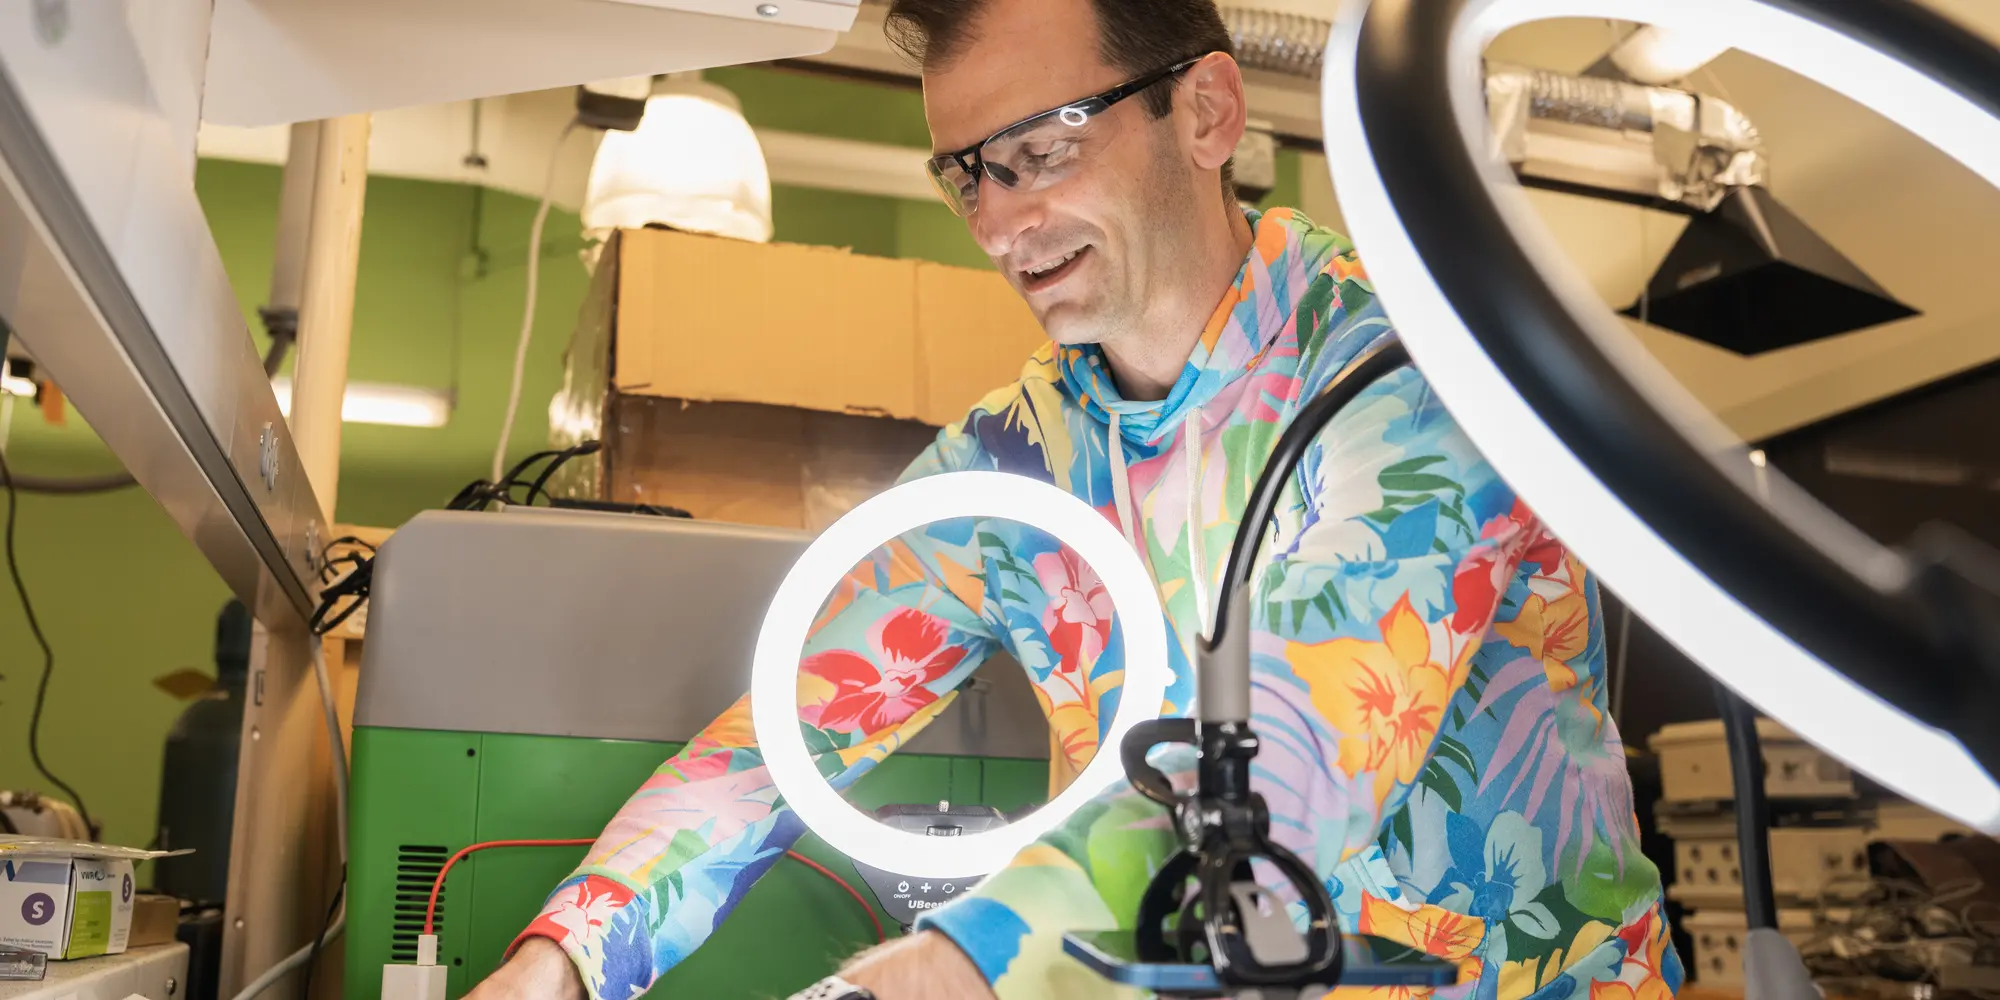 Man in lab wearing colorful shirt